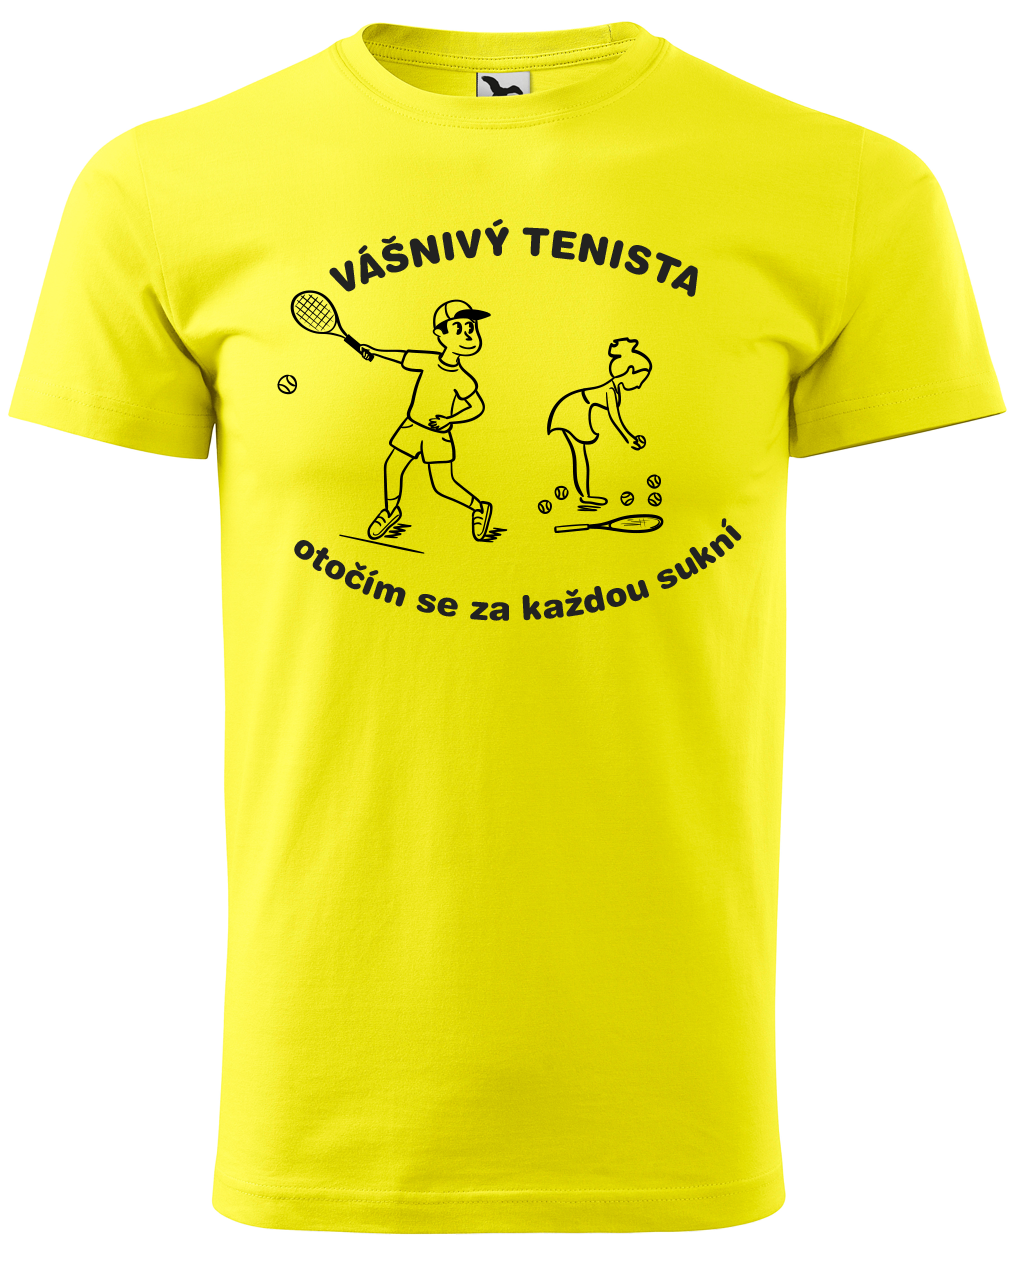 Vtipné tenisové tričko - Vášnivý tenista Velikost: S, Barva: Žlutá (04)